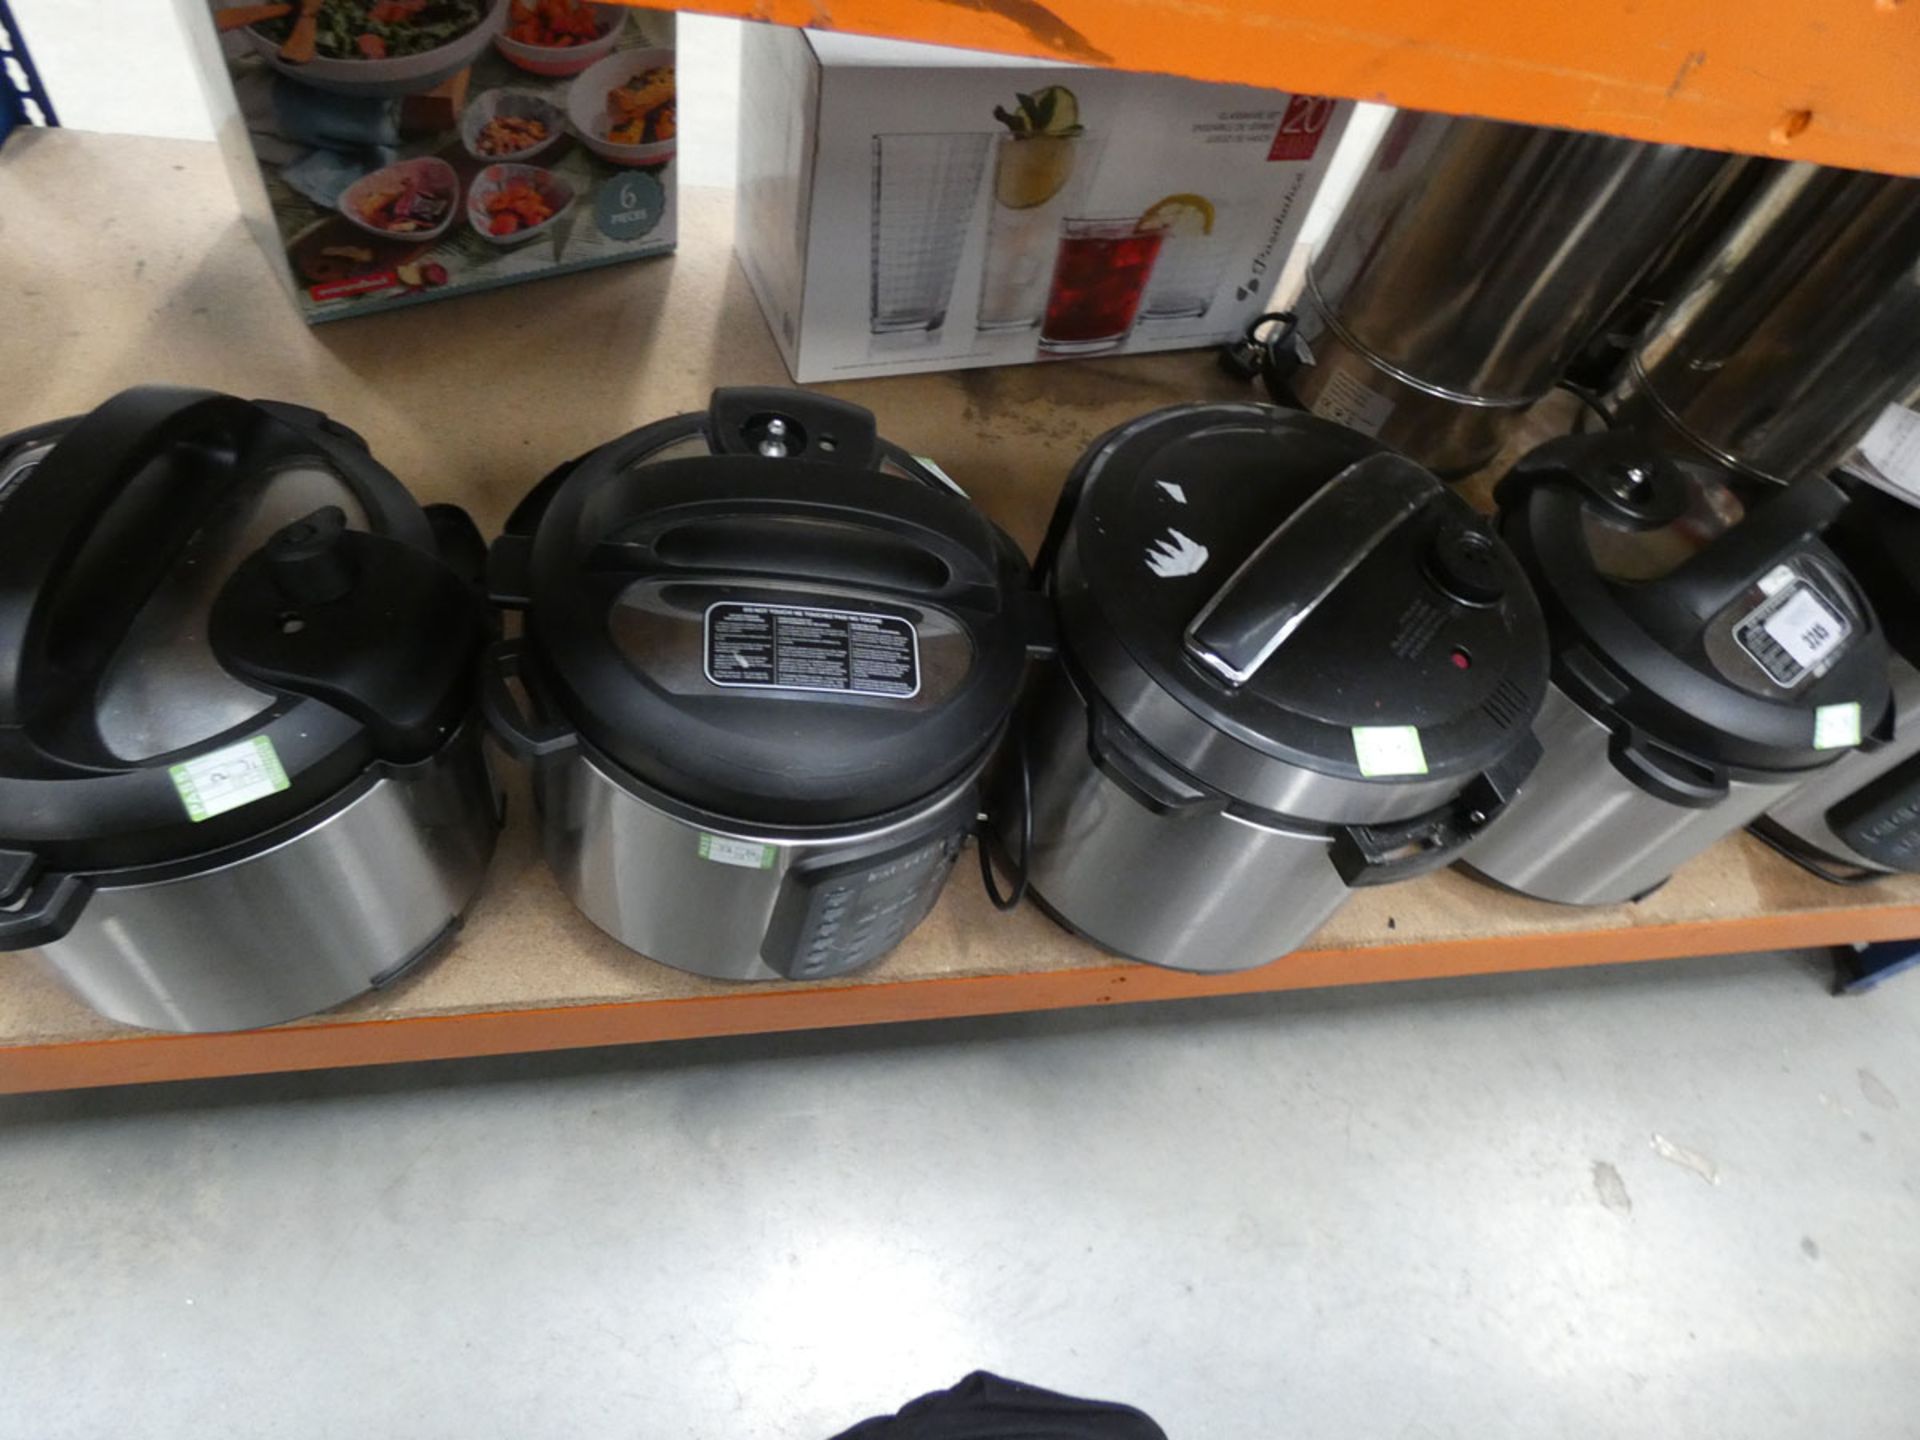 3044 - 4 unboxed Instant pots plus a pressure cooker - Image 2 of 2